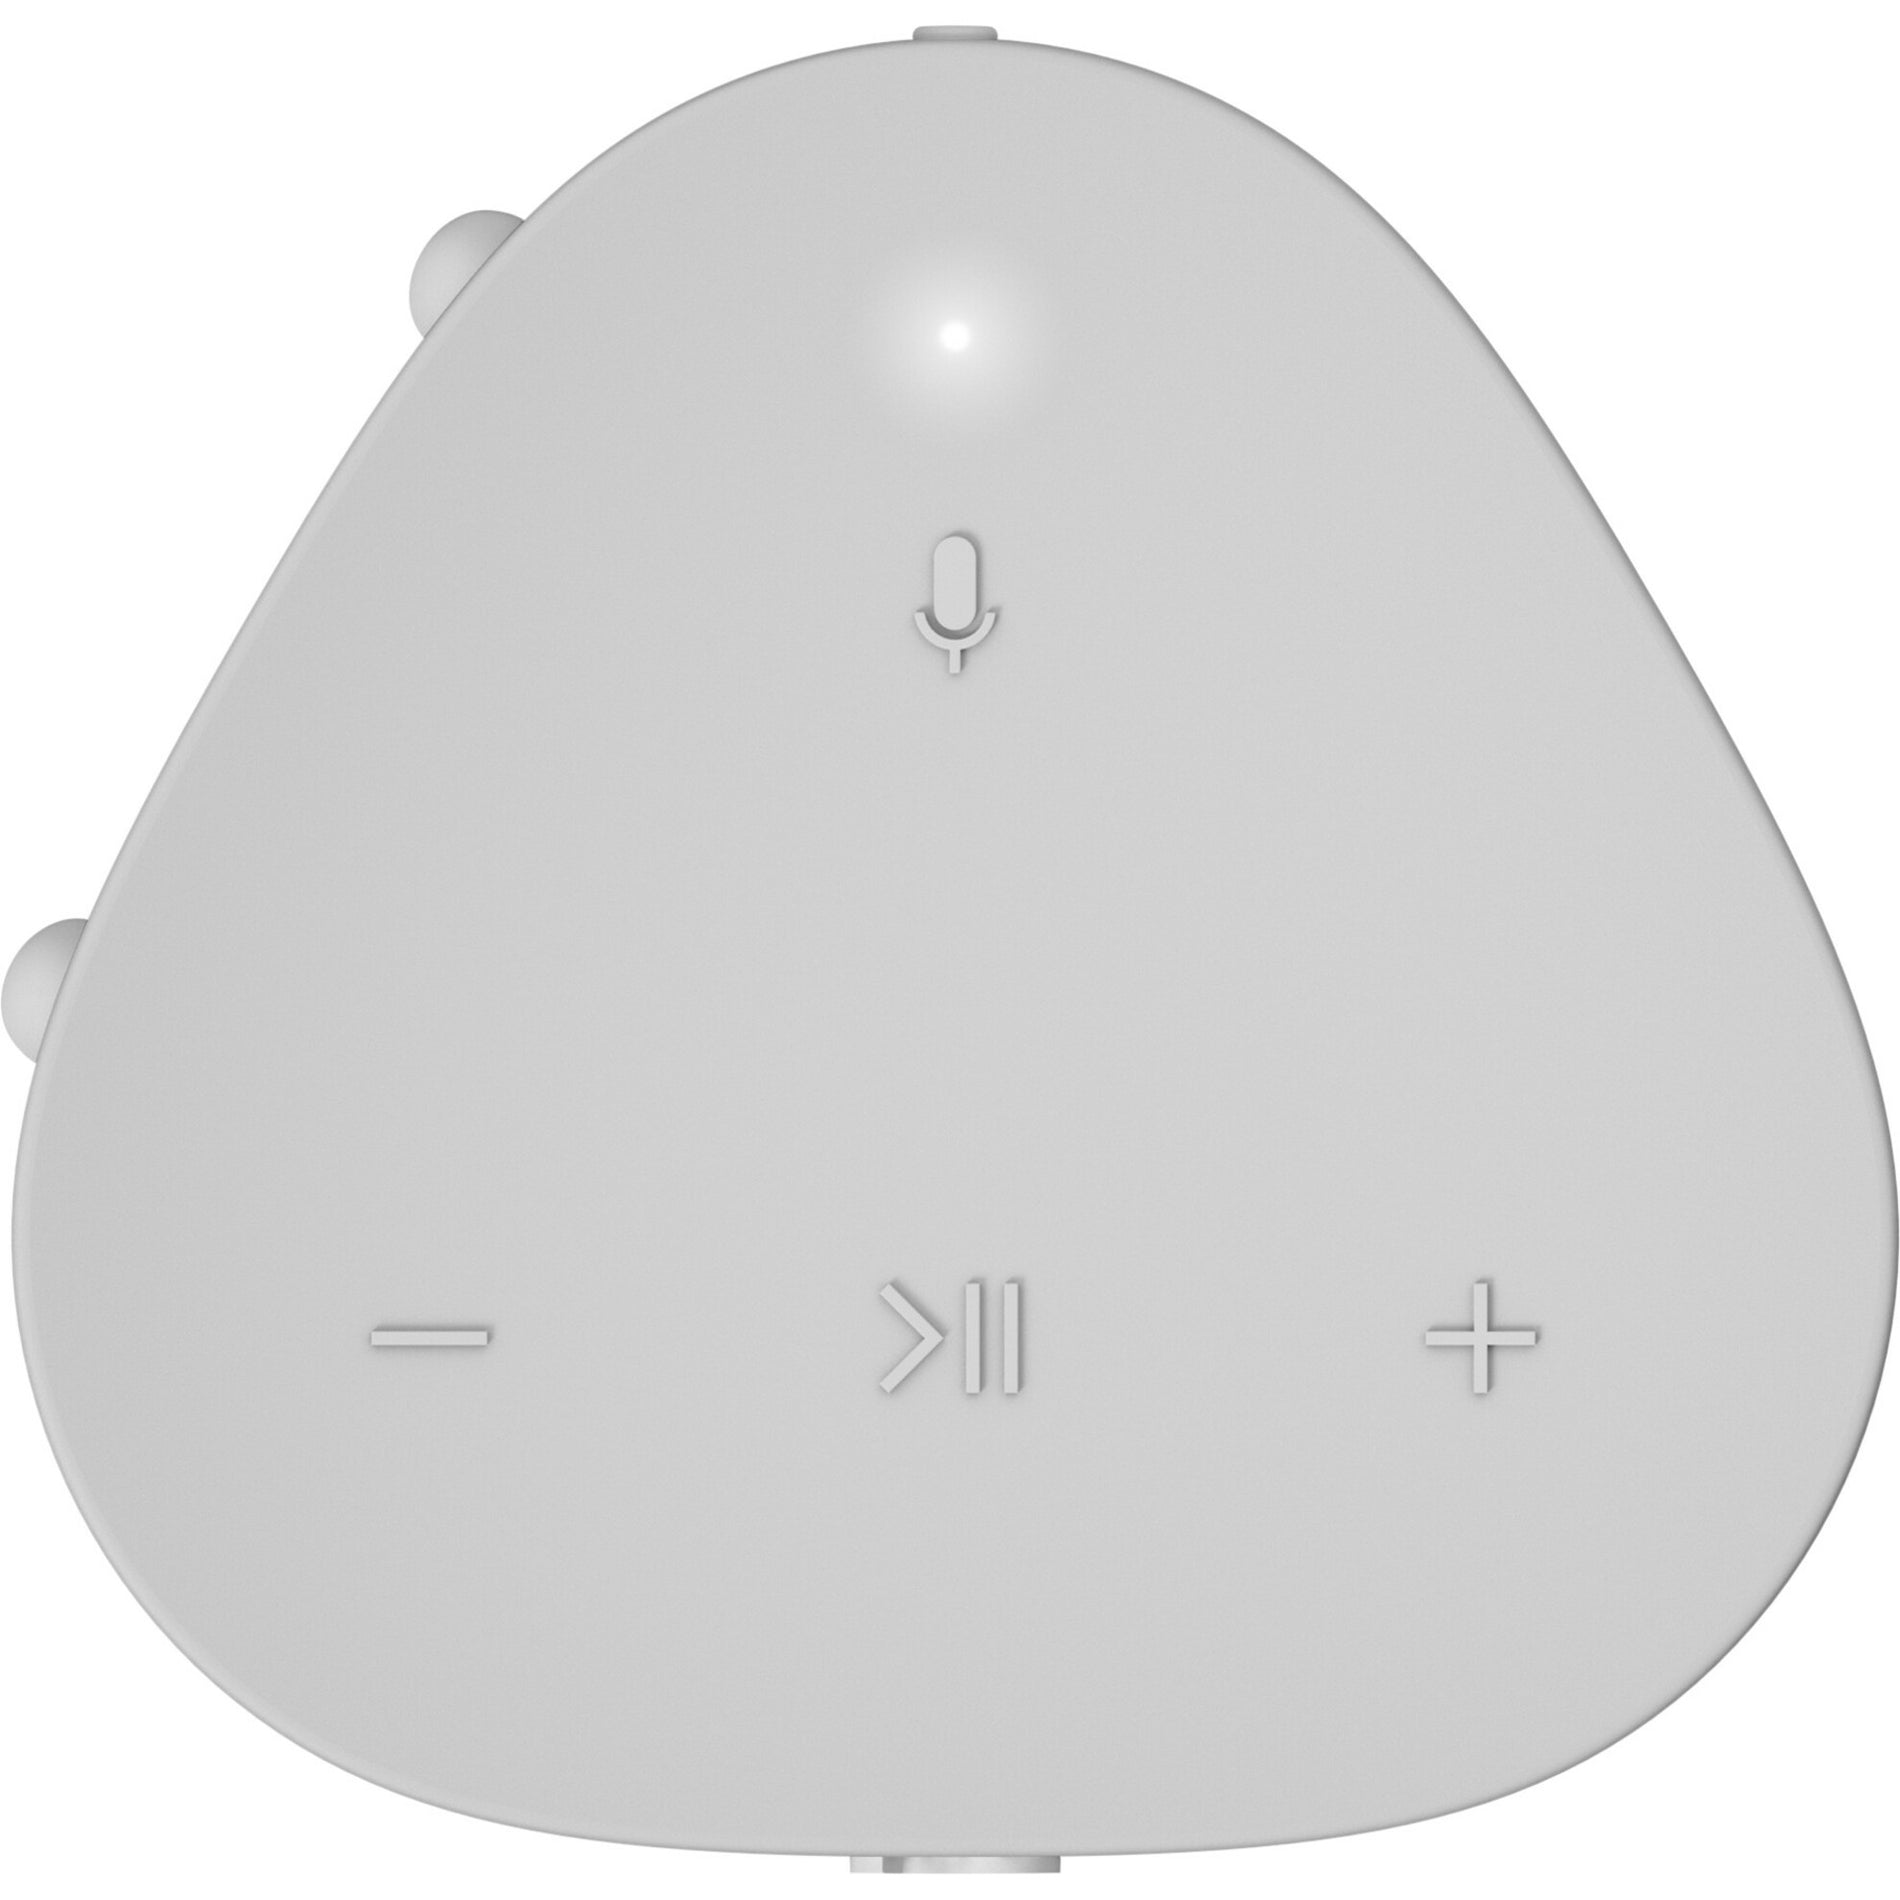 SONOS ROAM1US1 Roam Smart Speaker, Portable Wi-Fi and Bluetooth Speaker with Amazon Alexa and Google Assistant, White